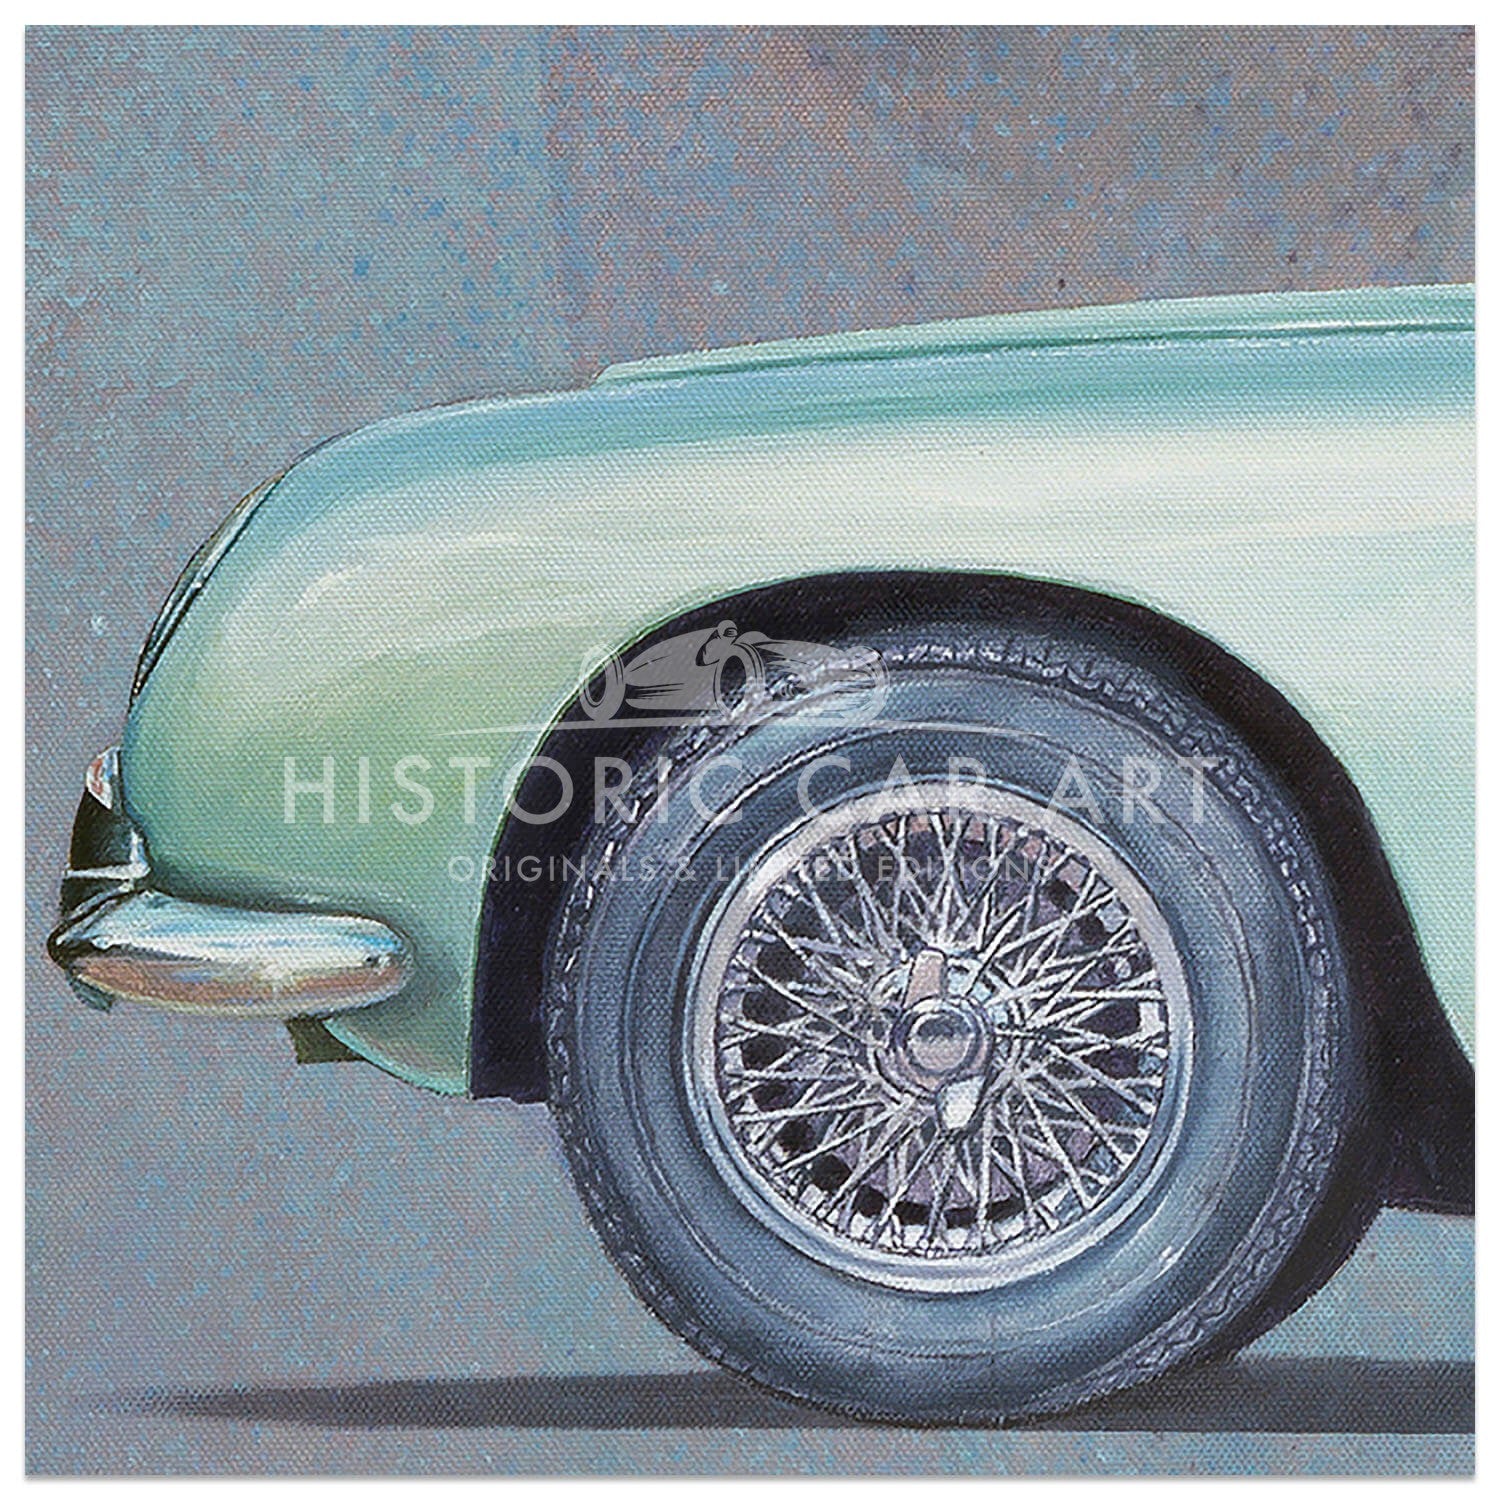 1963 Aston Martin DB4 Series 5 Vantage | Artwork